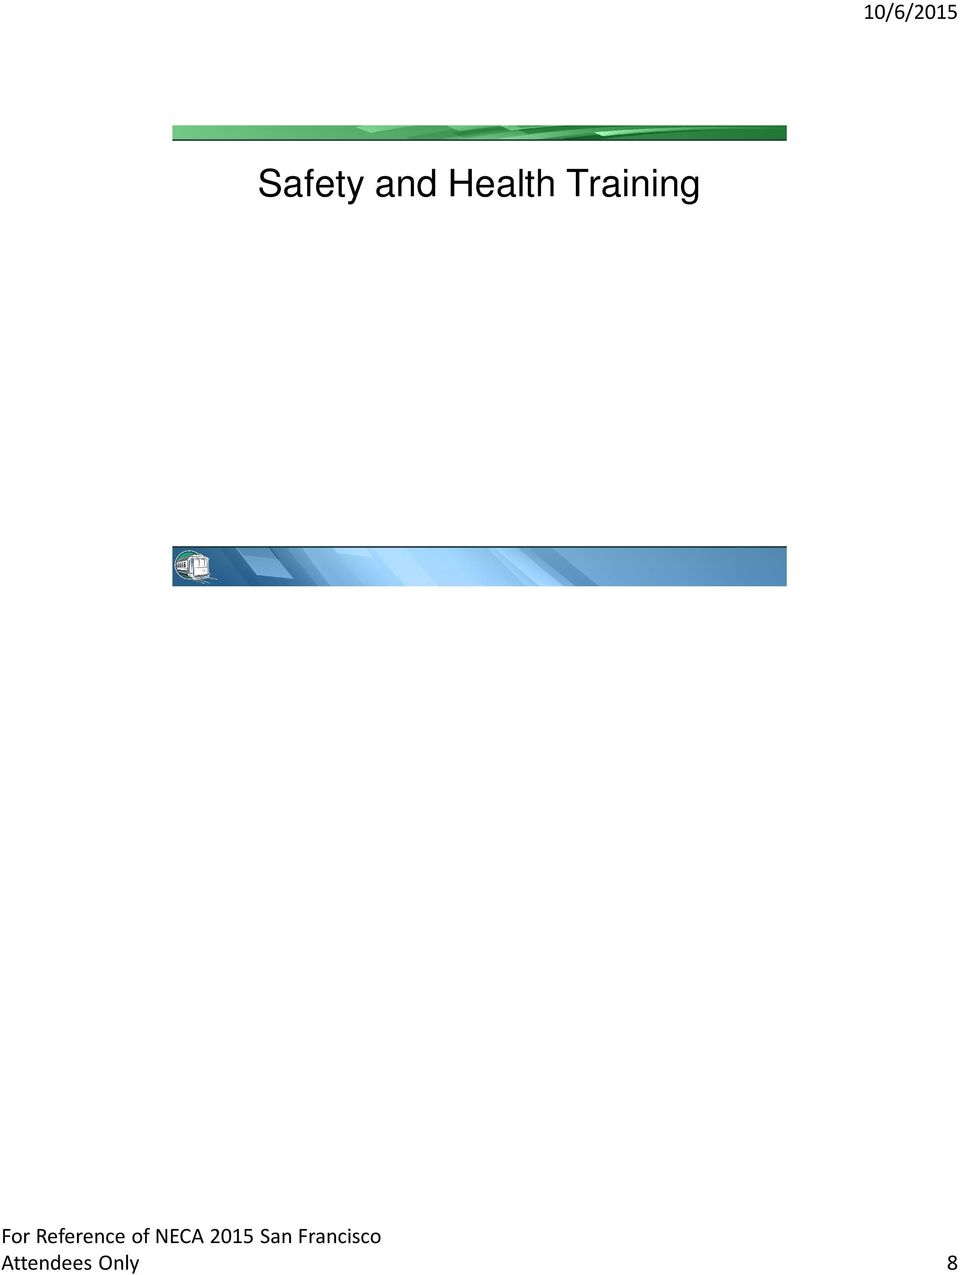 Respirator Training Safety and Health Training Written Programs Task Training Fire